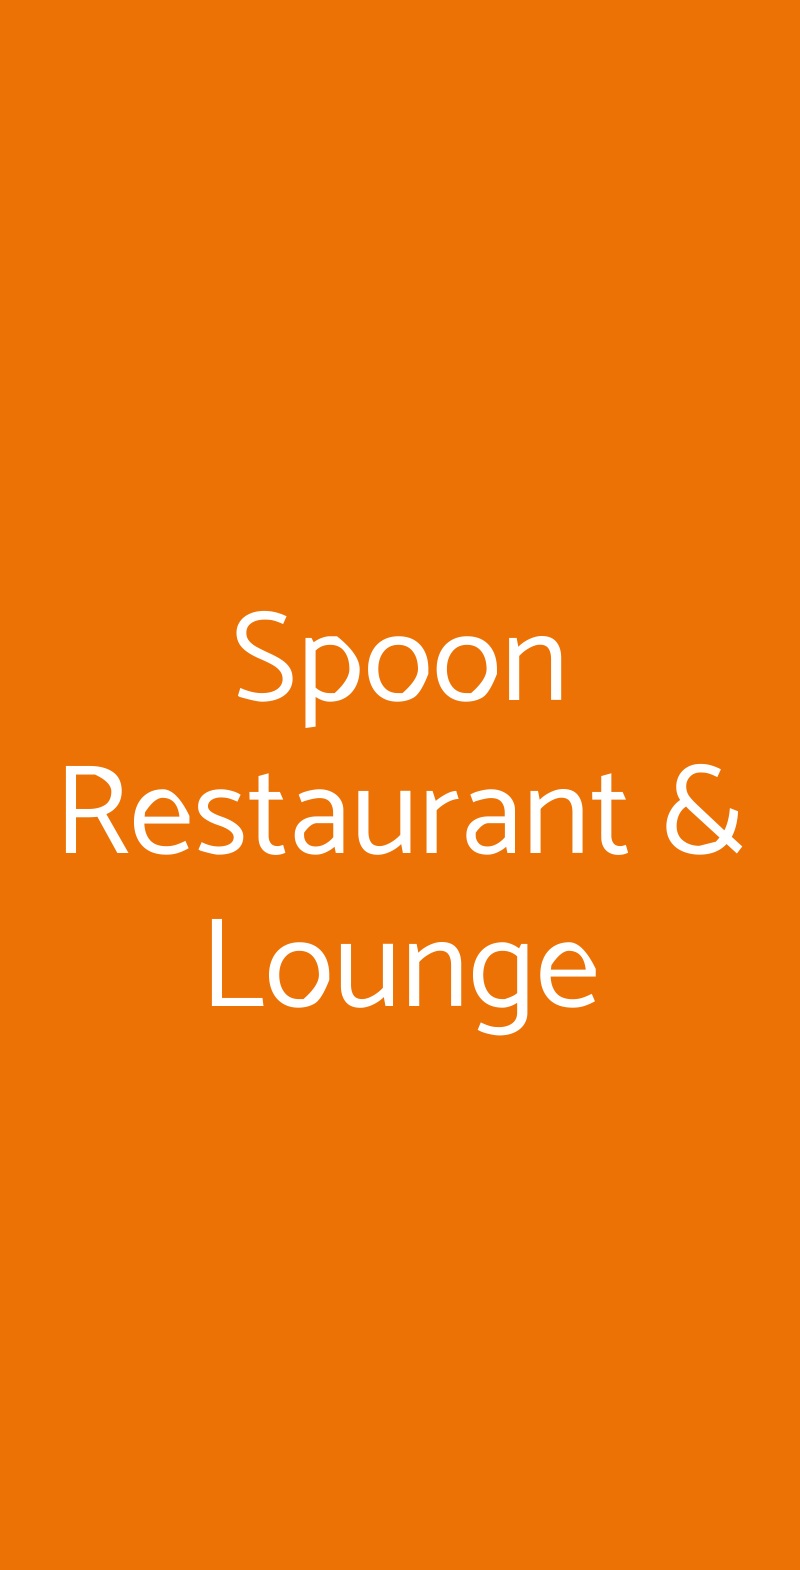 Spoon Restaurant & Lounge Milano menù 1 pagina